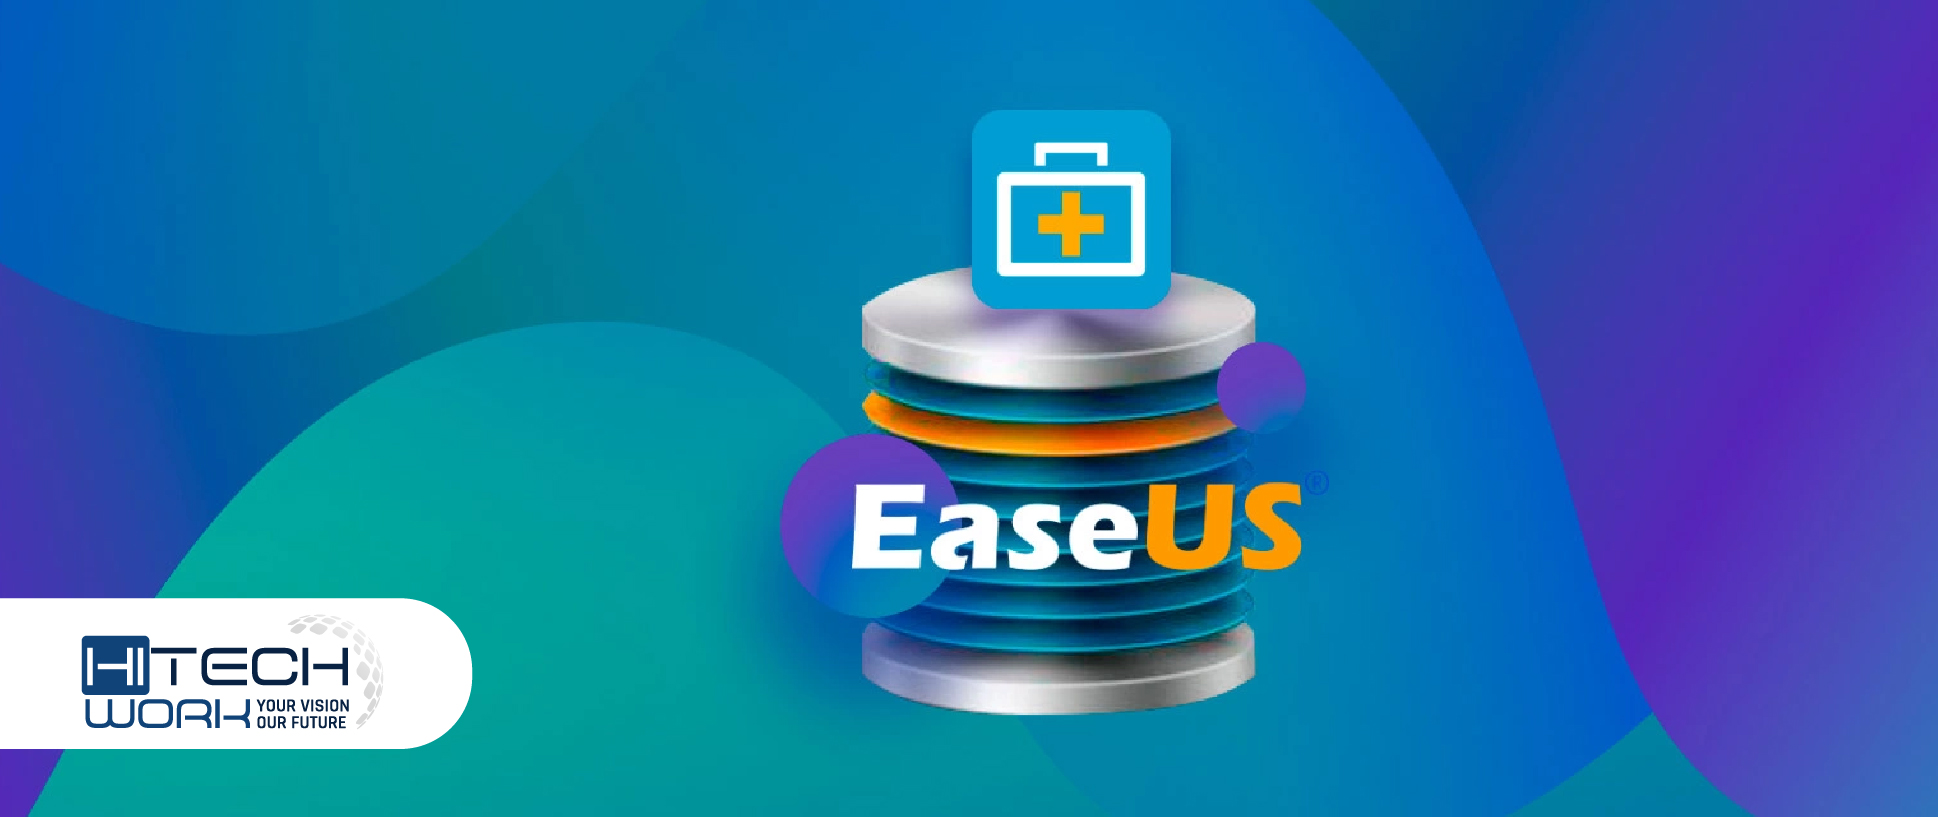 EaseUS data recovery key